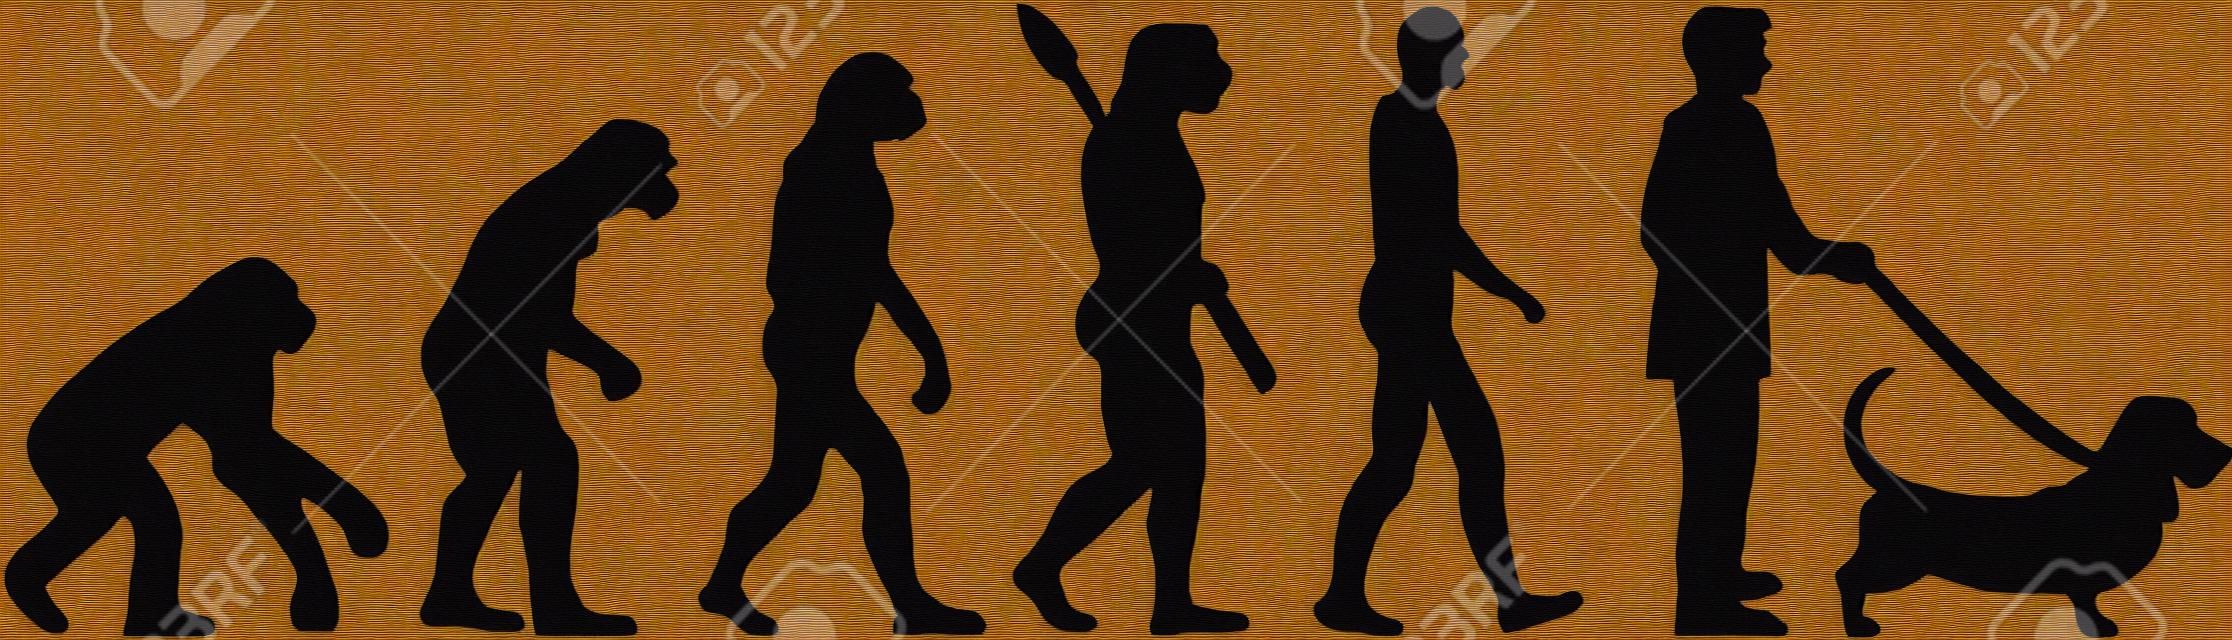 Basset hound evolution with silhouette illustration.